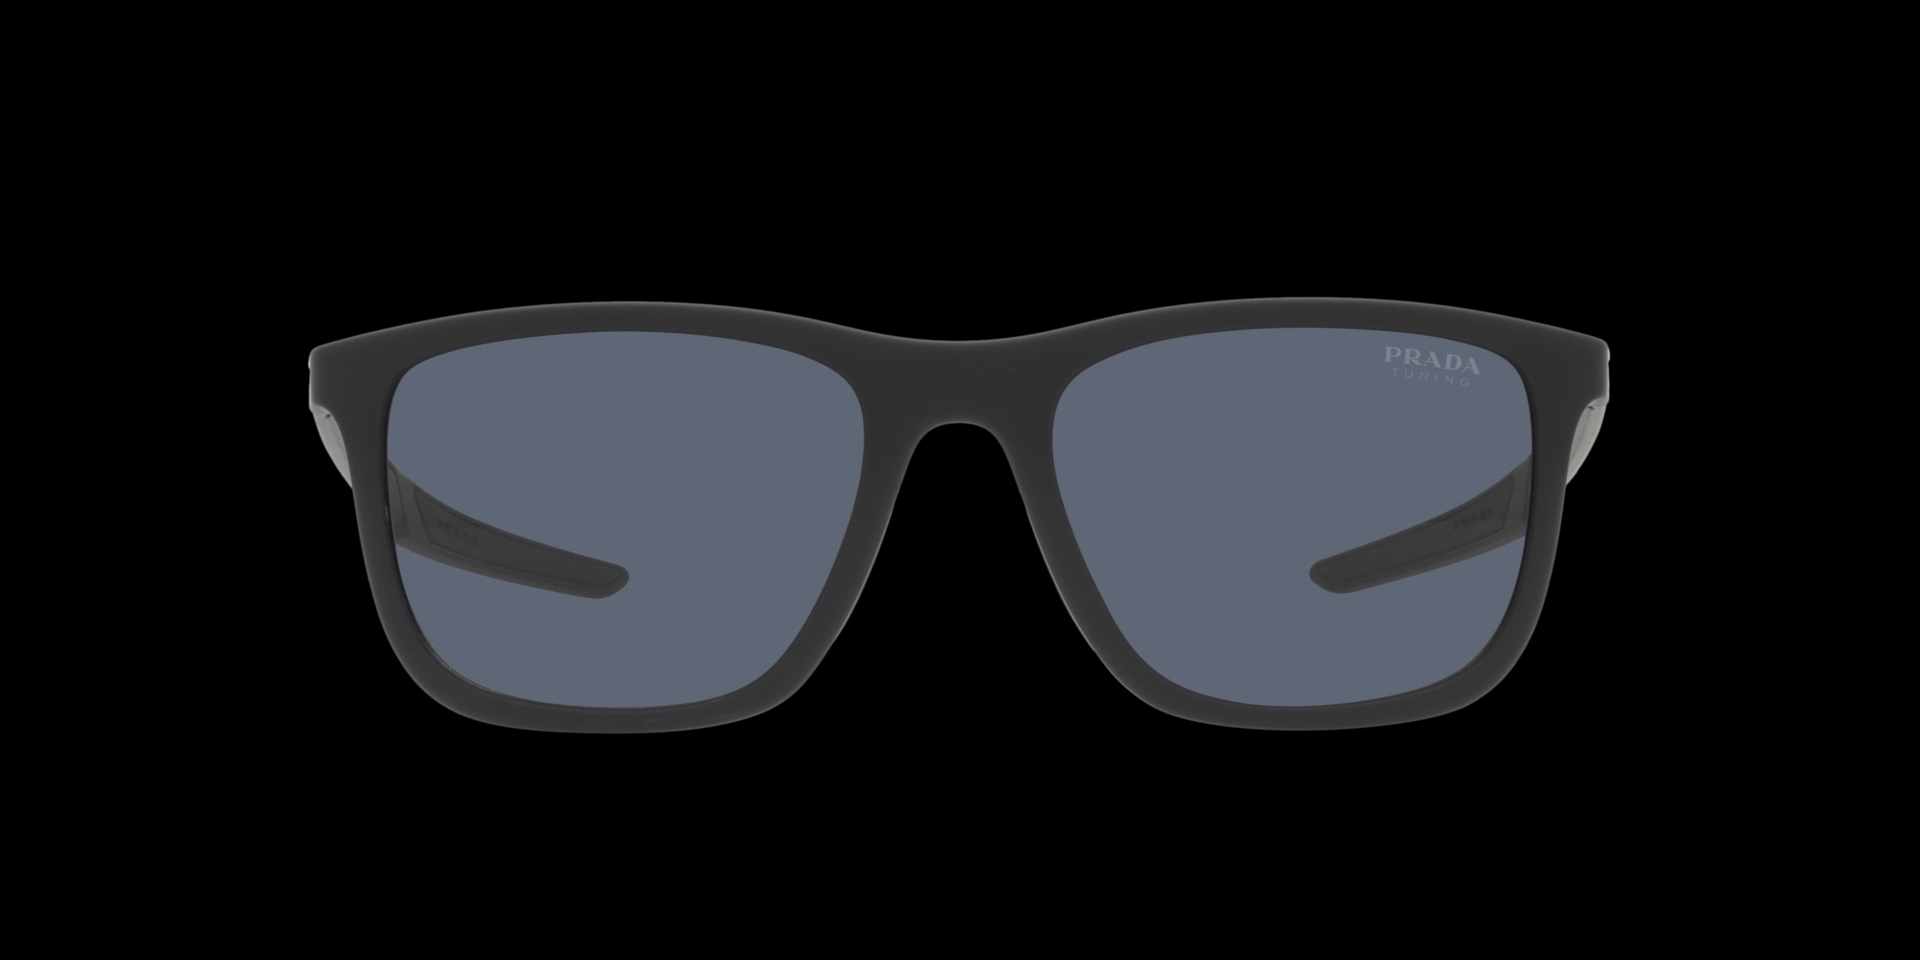 PRADA EYEWEAR Oval-frame tortoiseshell acetate sunglasses | NET-A-PORTER